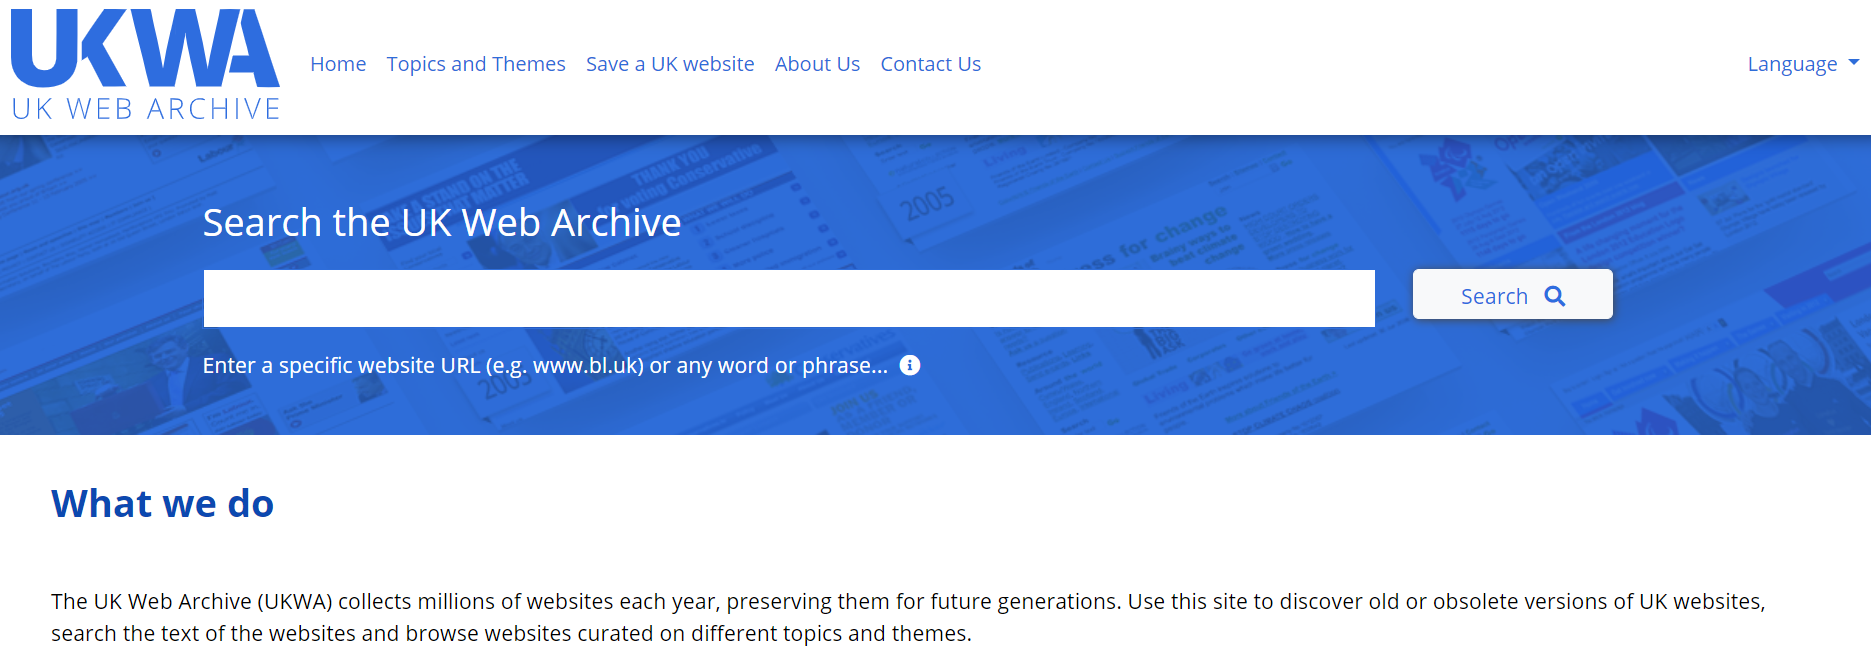 UK Web Archive